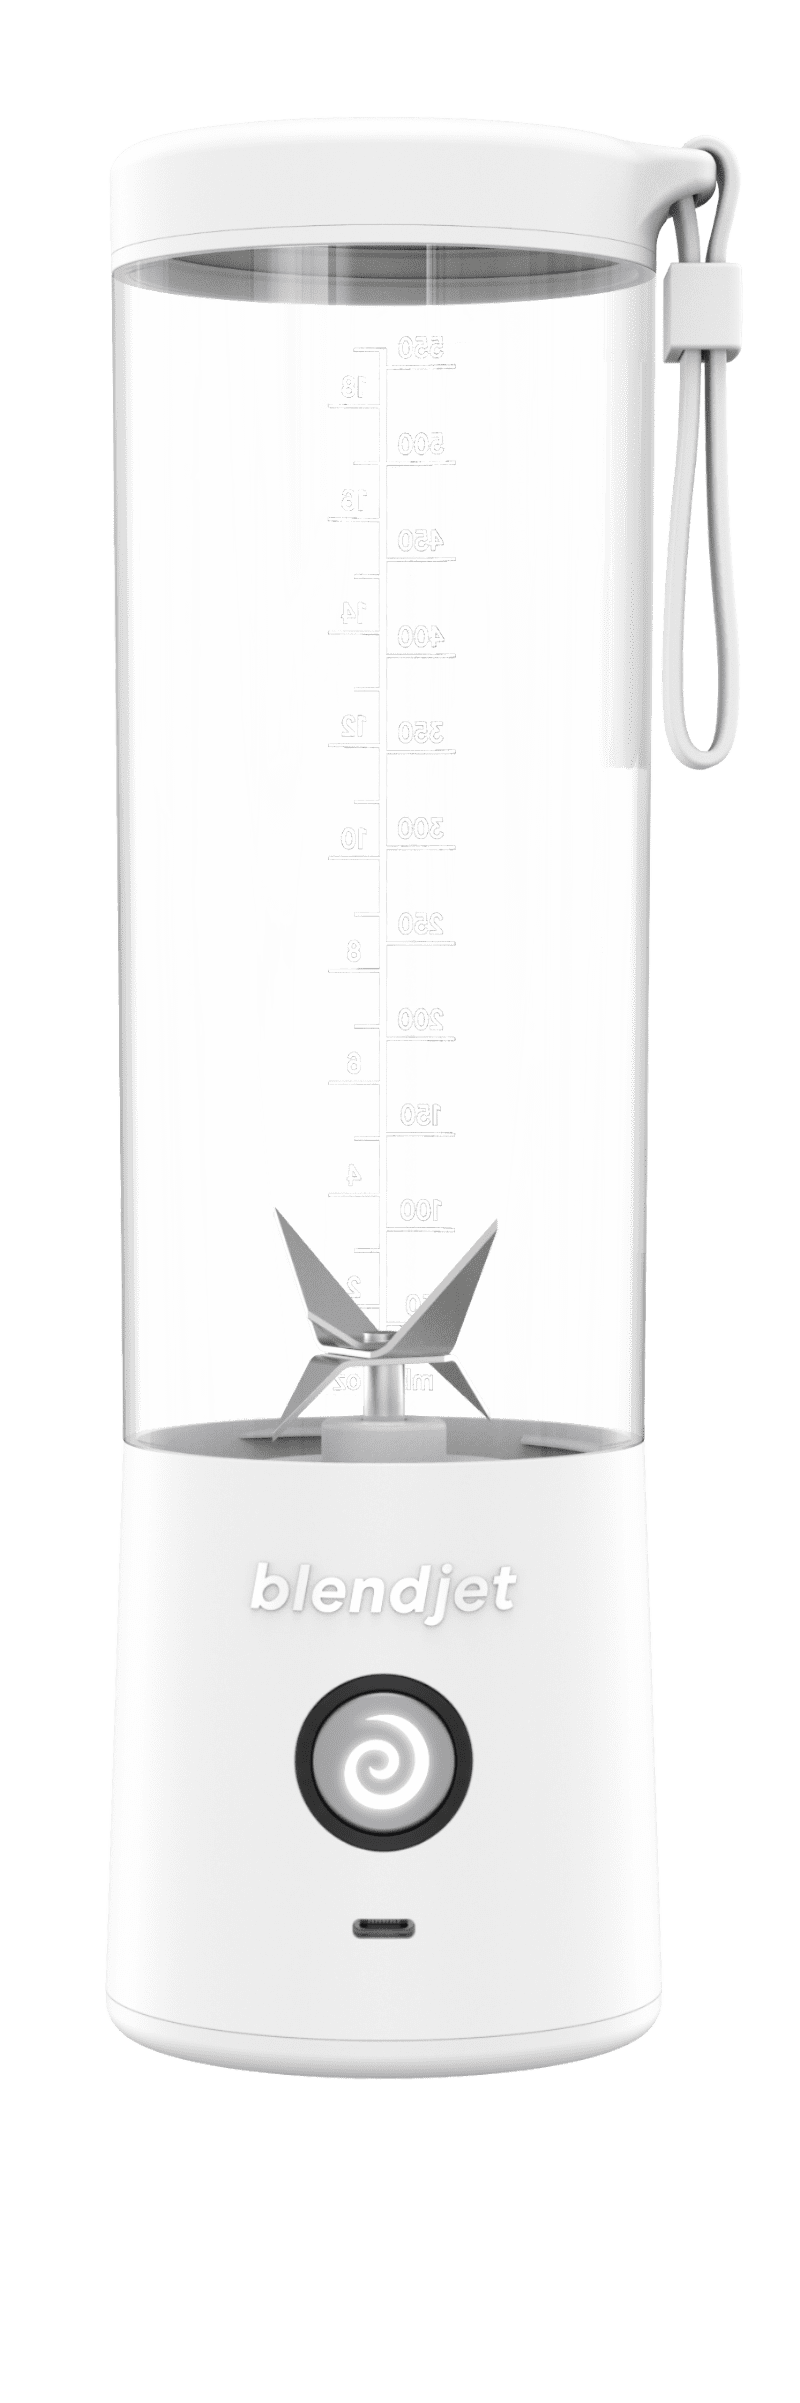 BlendJet 2, the Original Portable Blender, 20 oz, White